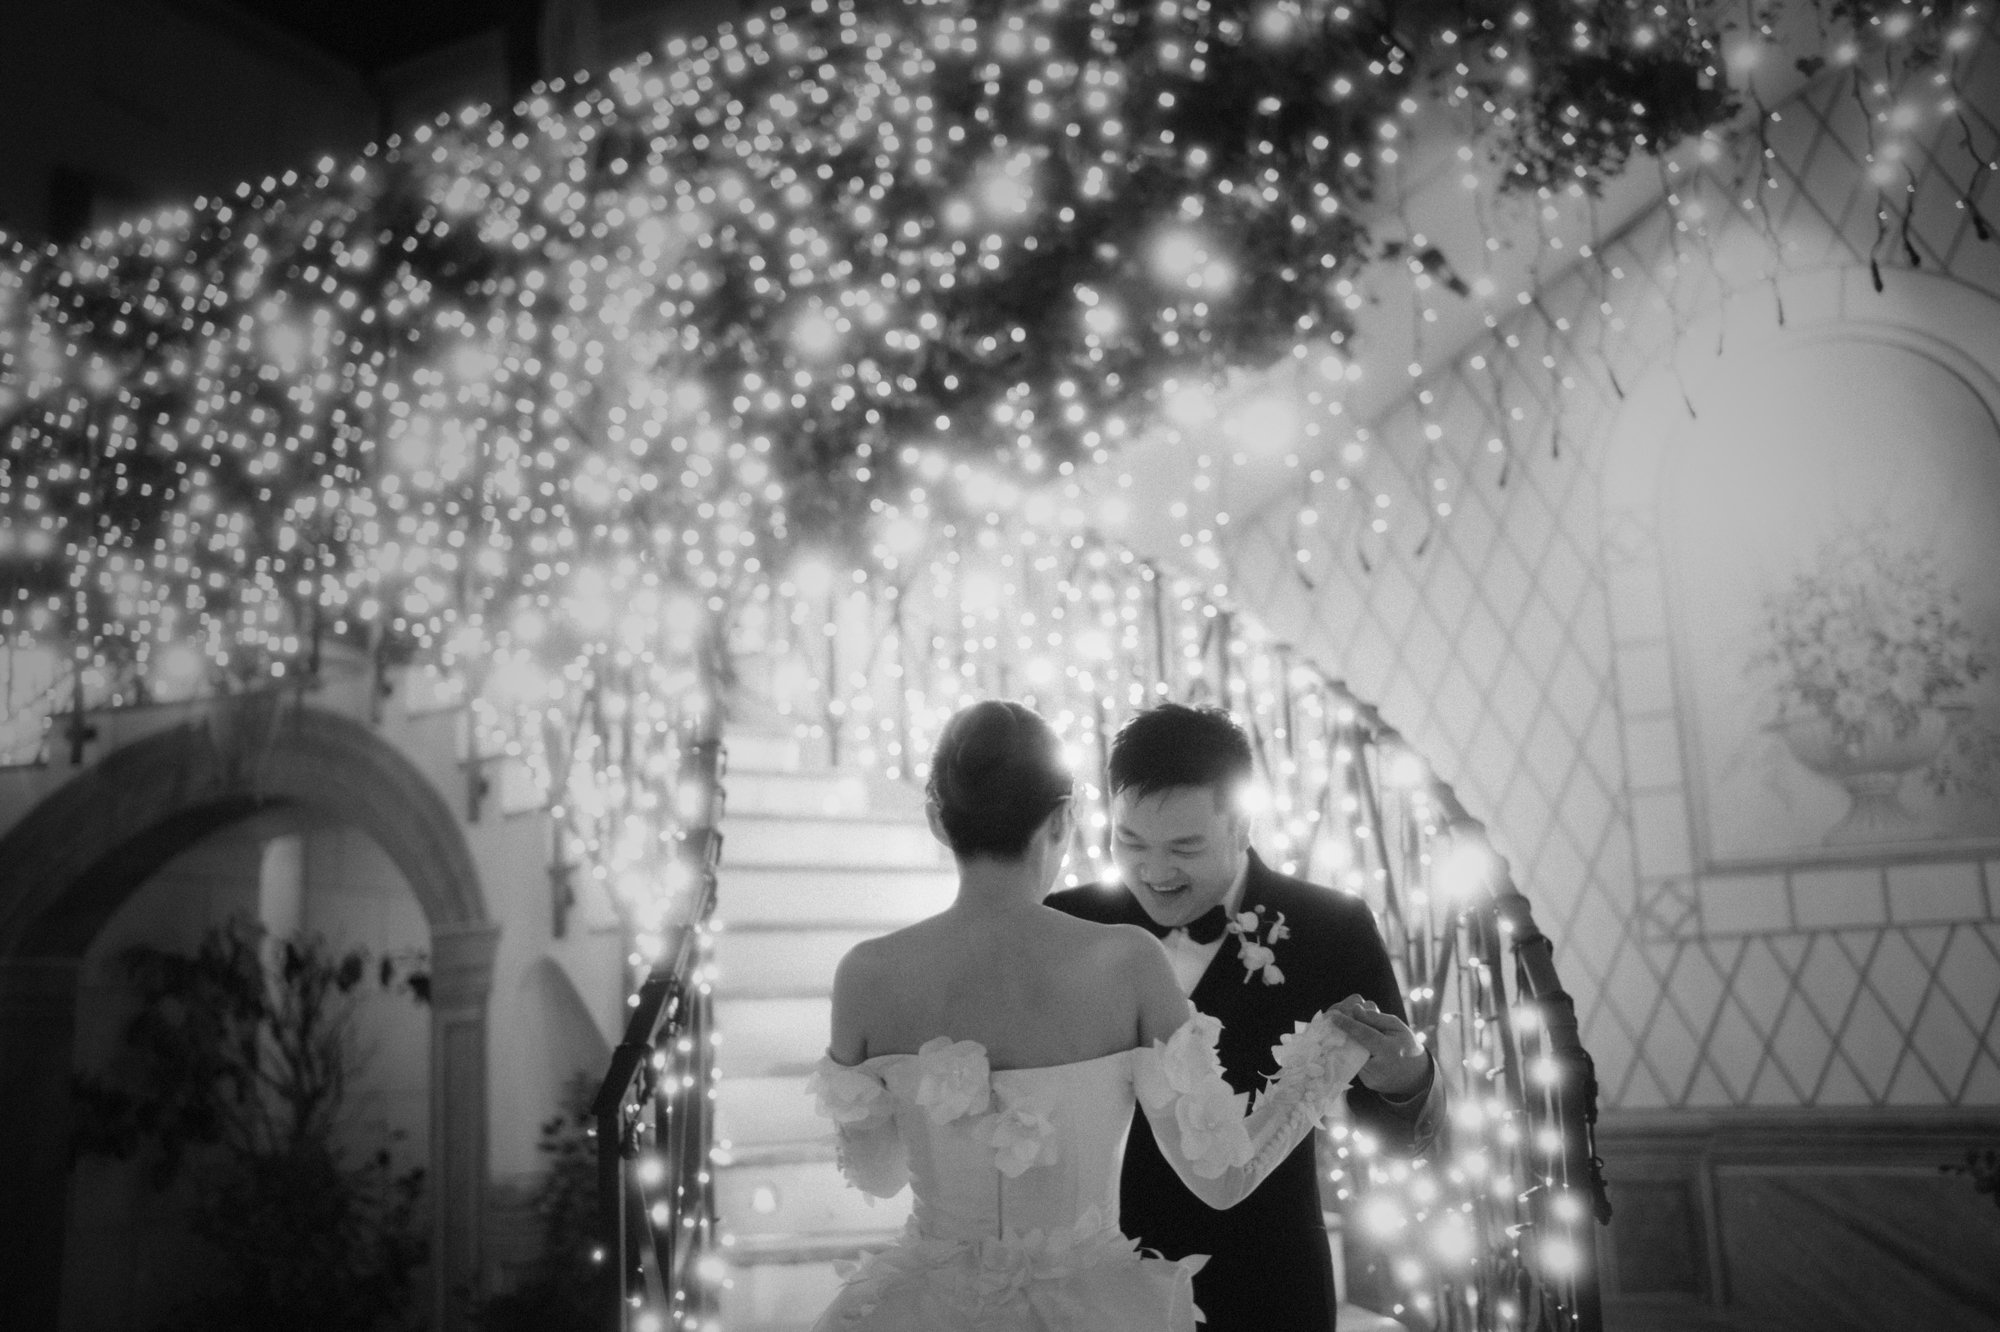 Prawira-Evelyn-Dolomites-Italy-Santre wedding-Yefta Gunawan-Jeriko MUA-Carol Kuntjoro Photography-70.jpg